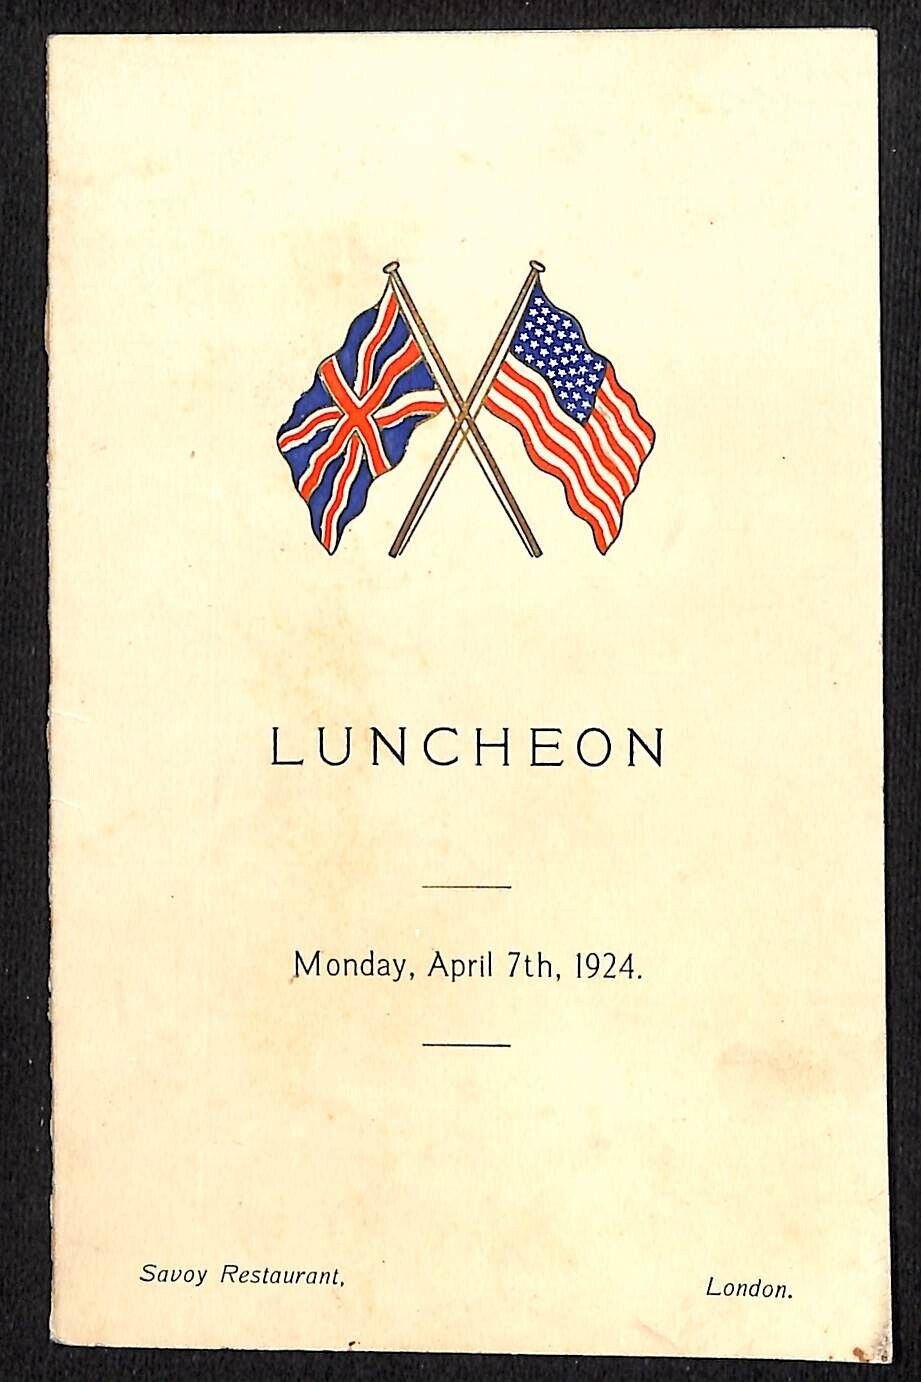 Savoy Restaurant London 4/7 1924 Luncheon Menu w/ U.S. Flag - Very Scarce